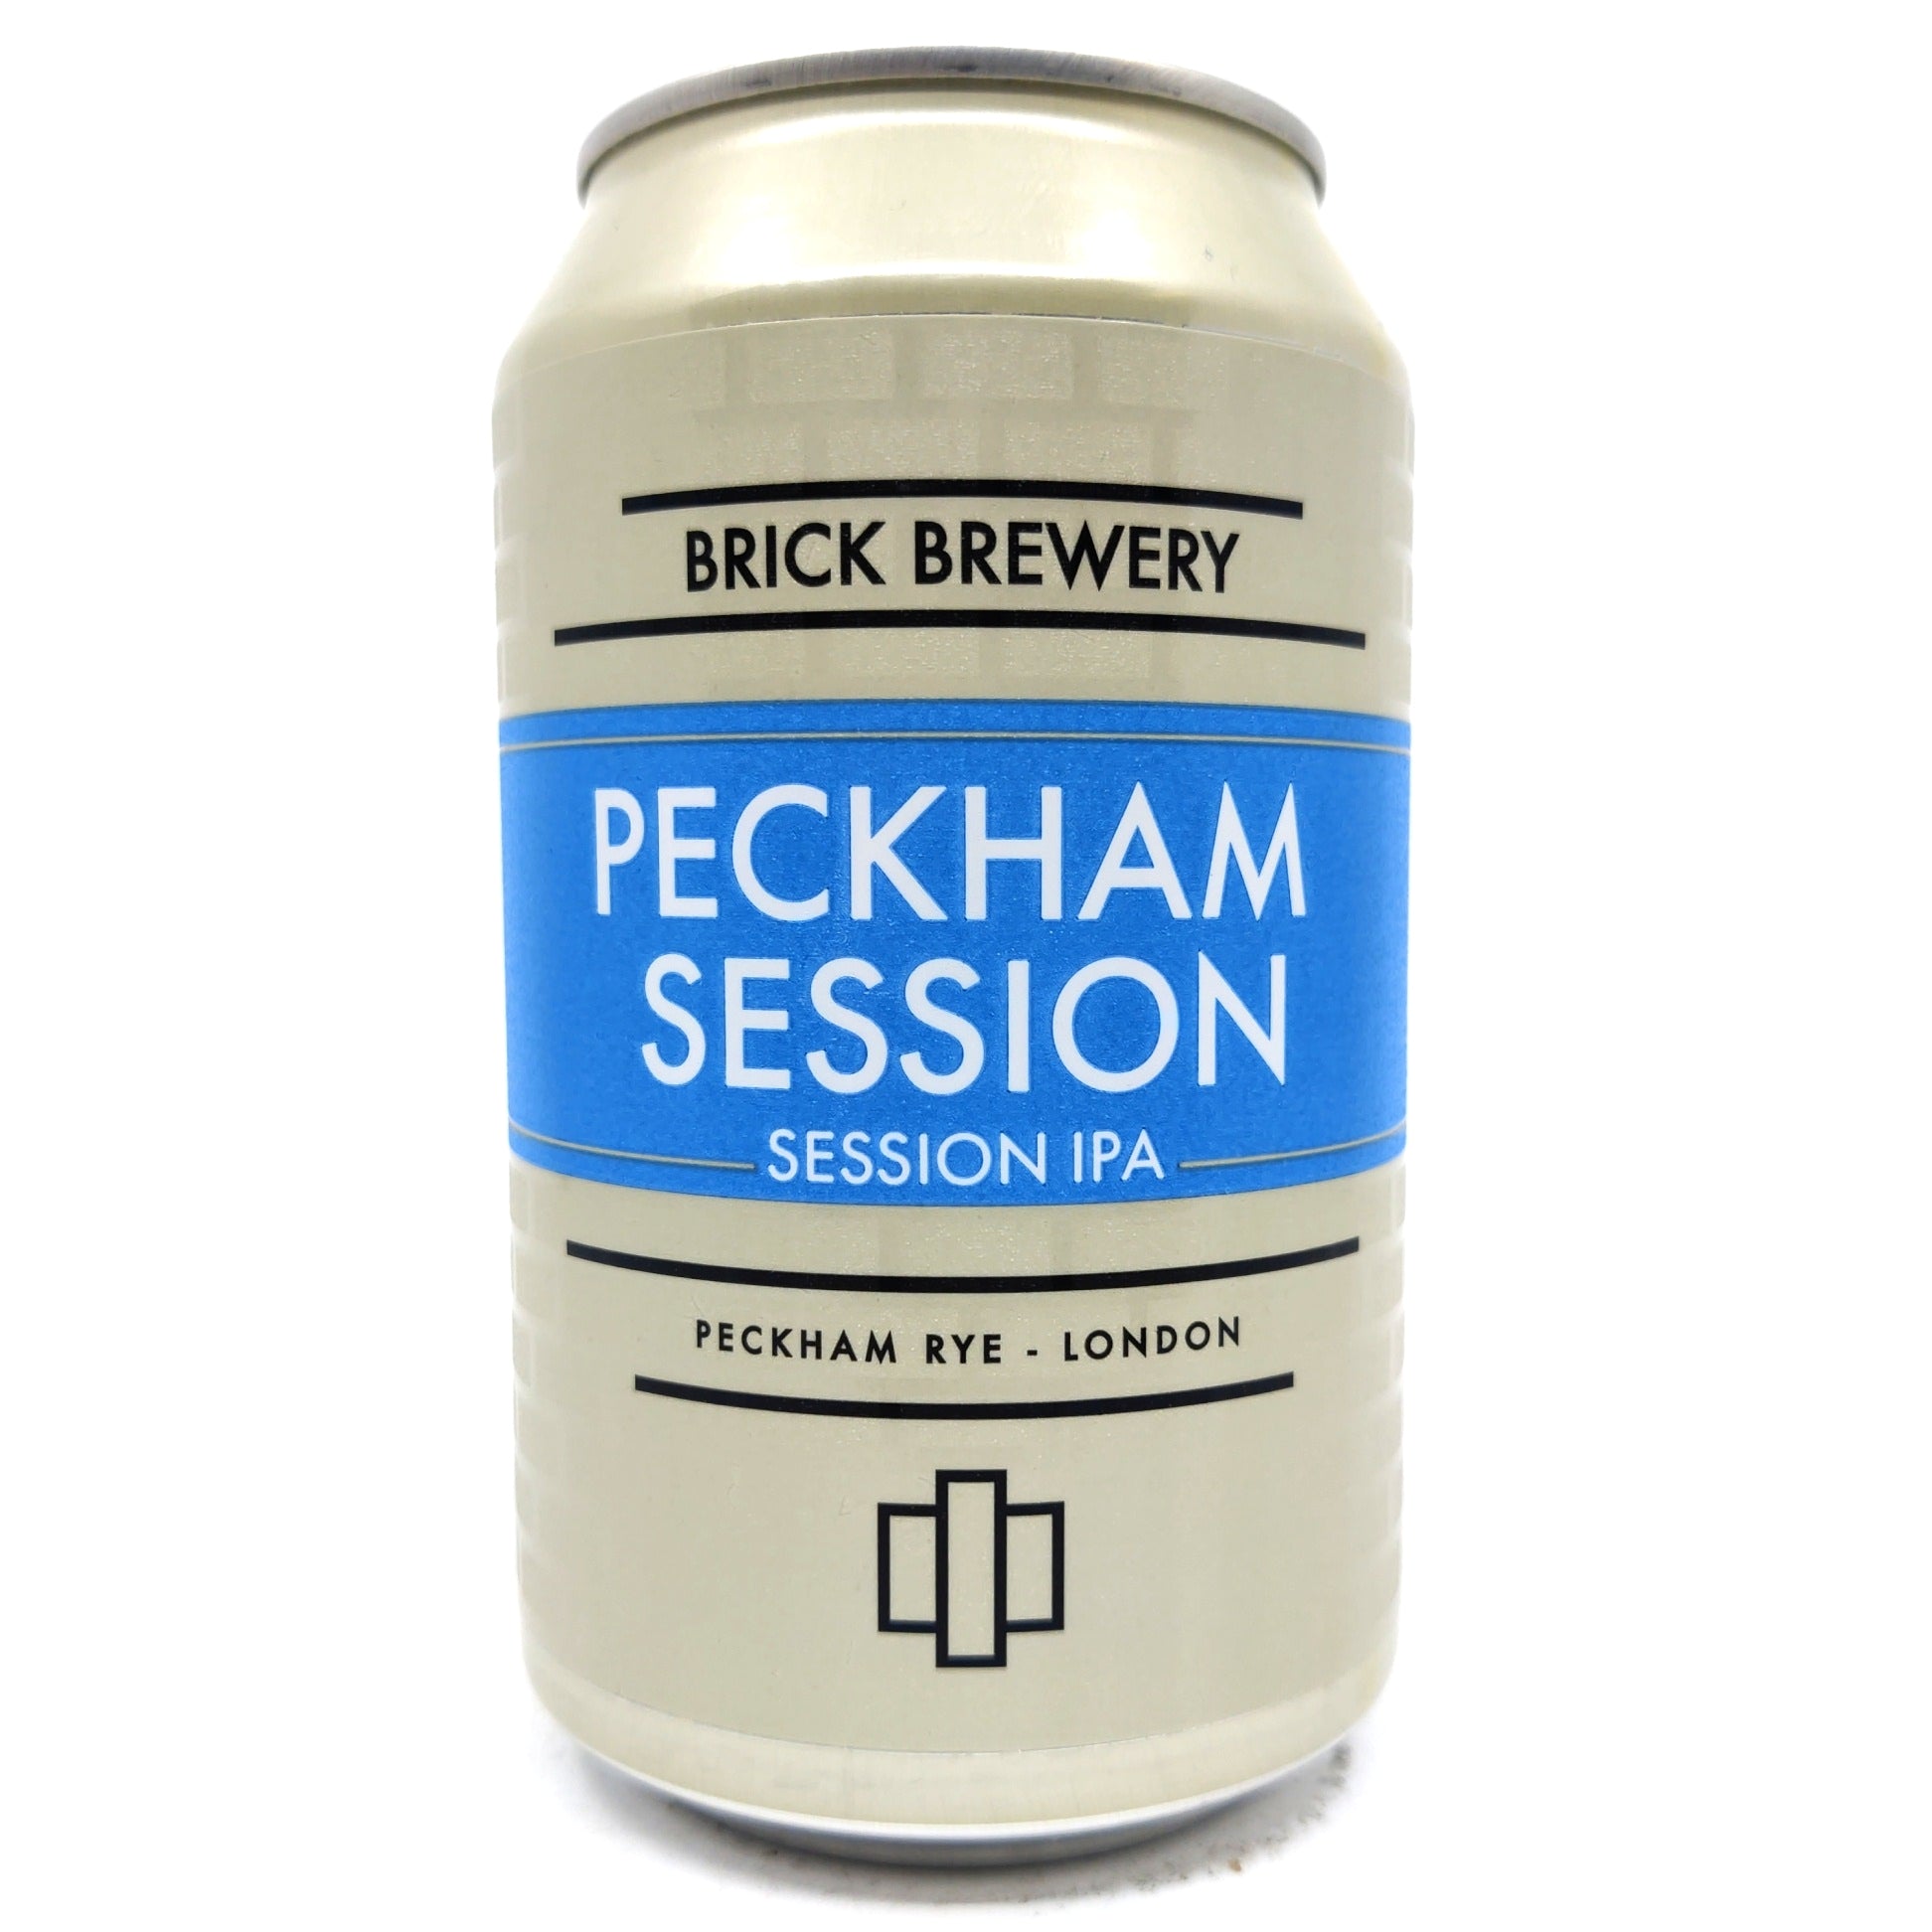 Brick Brewery Peckham Session IPA 4.2% (330ml can)-Hop Burns & Black